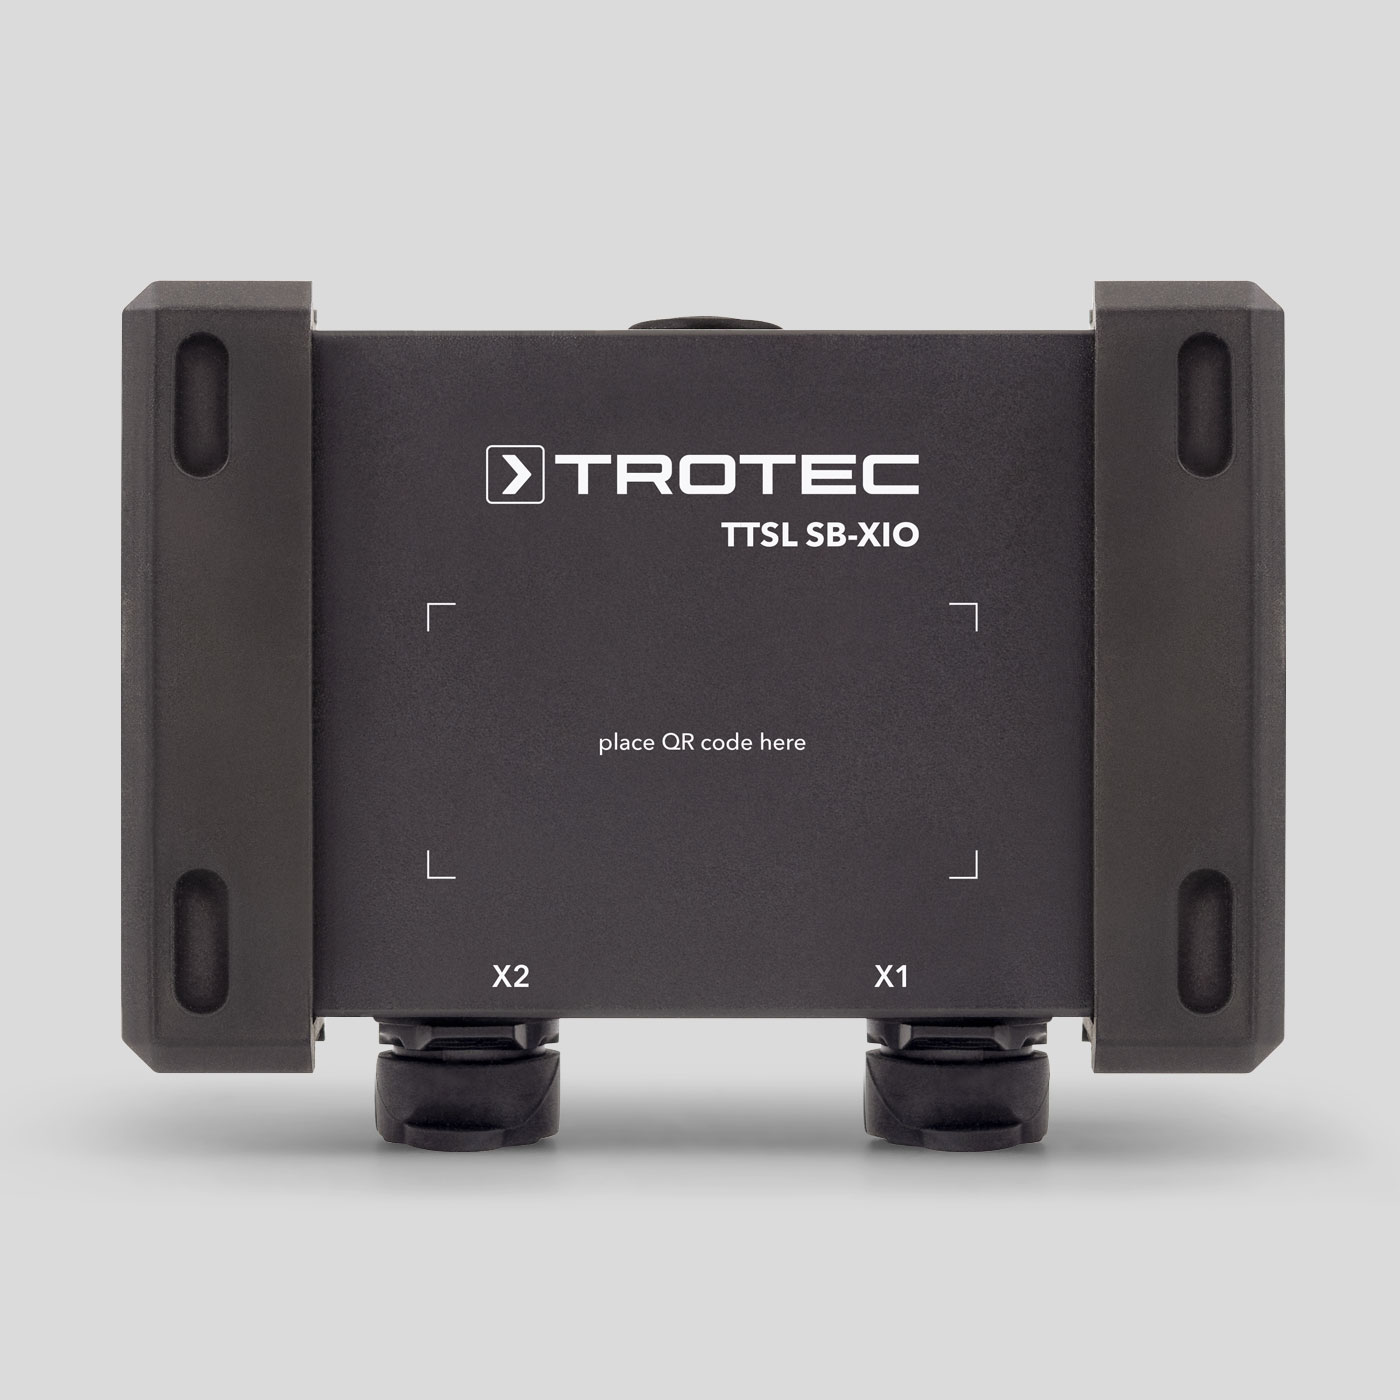 TTSL® SB-XIO radio sensor box for machinery, installations and sensor systems